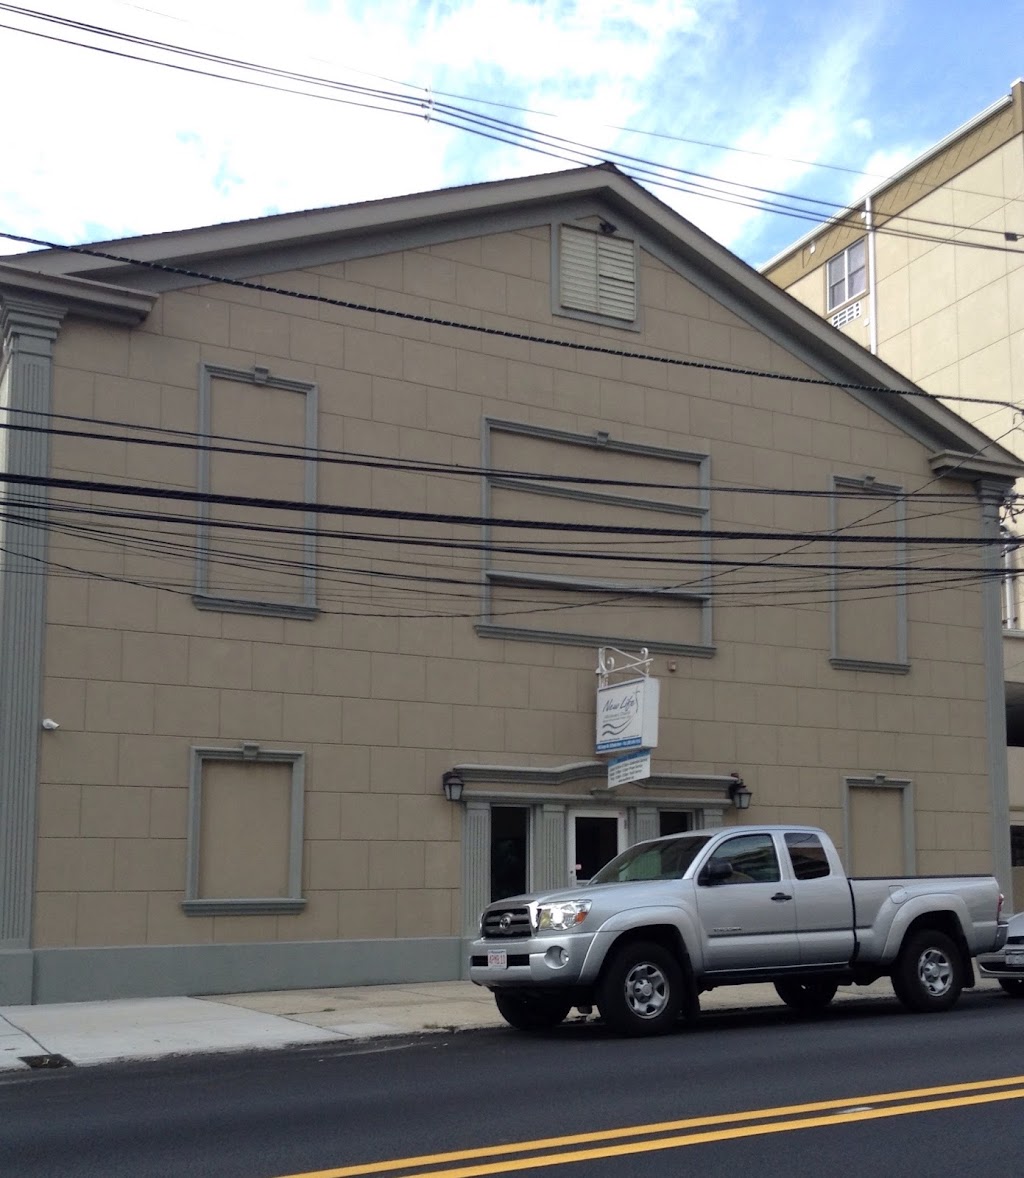 New Life Church | 444 Palisade Ave, Cliffside Park, NJ 07010 | Phone: (201) 941-1115